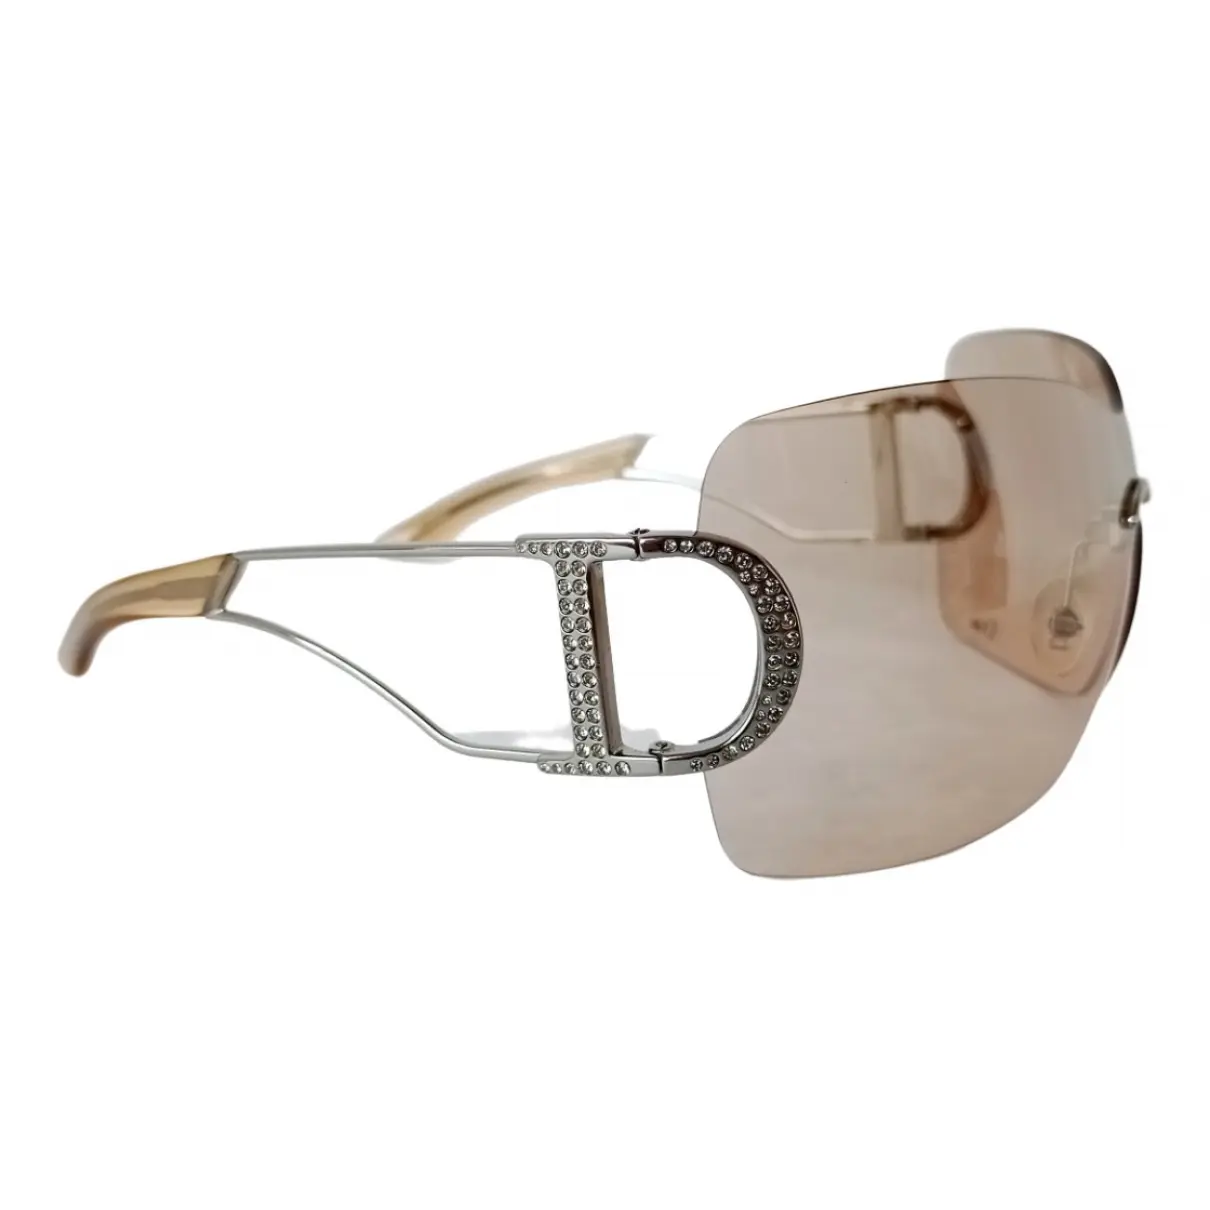 Buy Dior Goggle glasses online